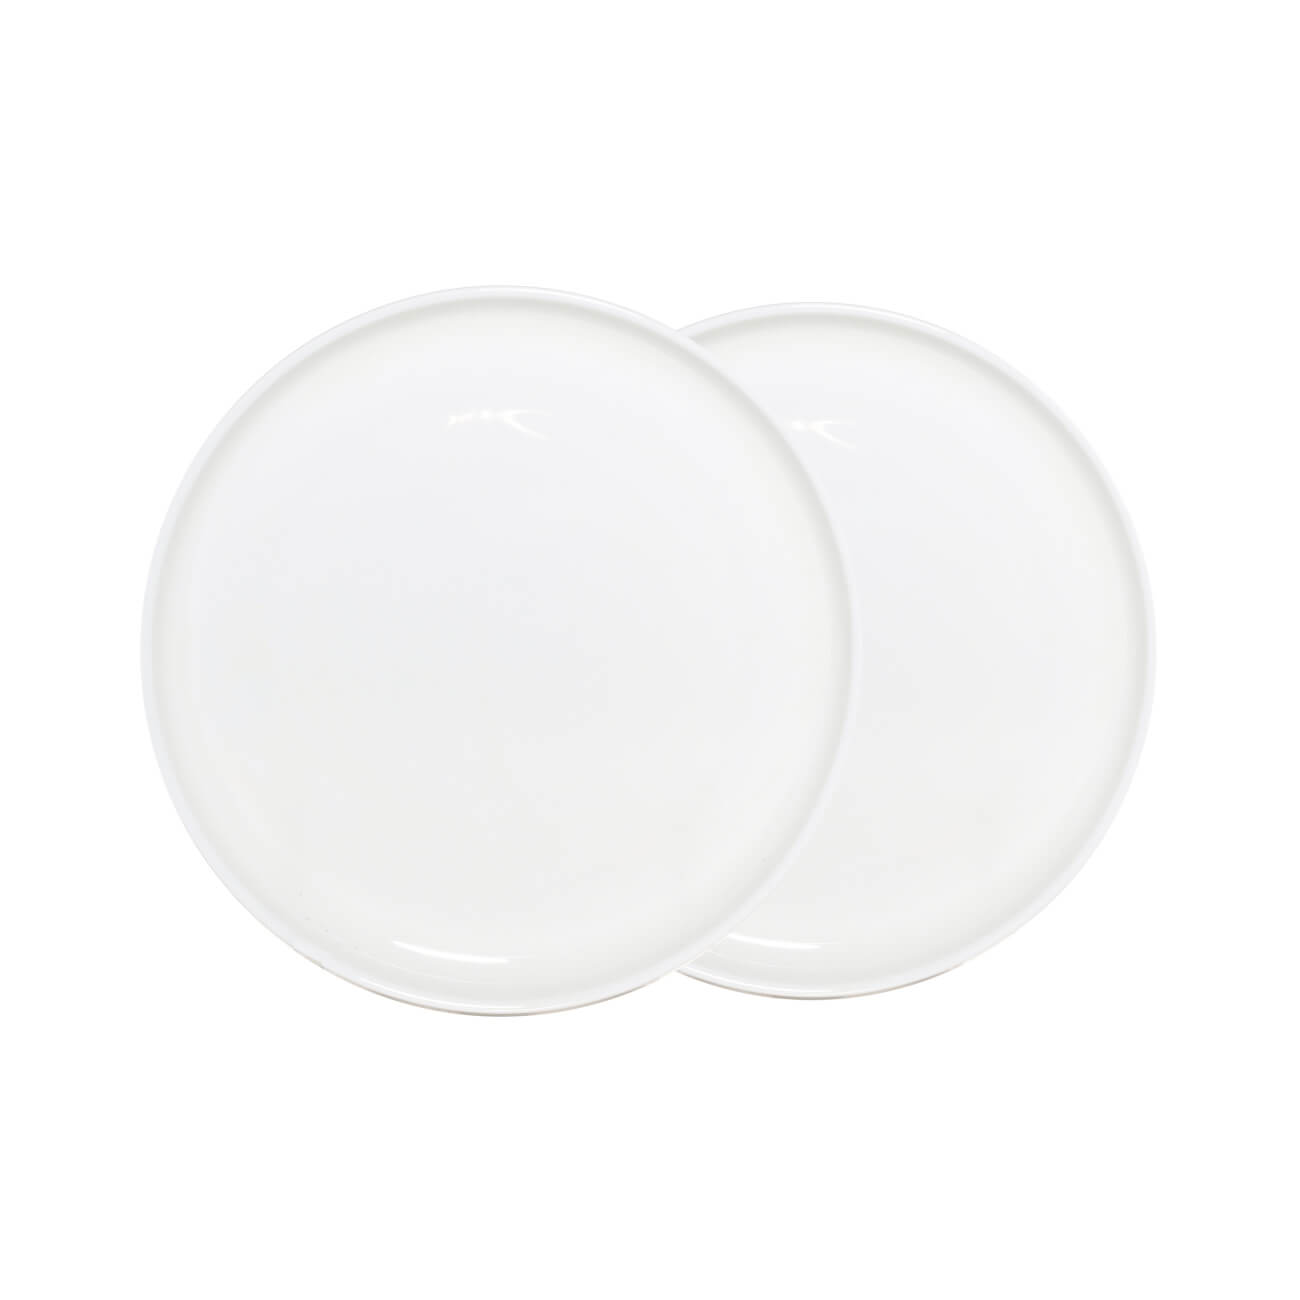 Kuchenland Тарелка десертная, 20 см, 2 шт, фарфор F, белая, Ideal white ложка десертная из нержавеющей стали magistro